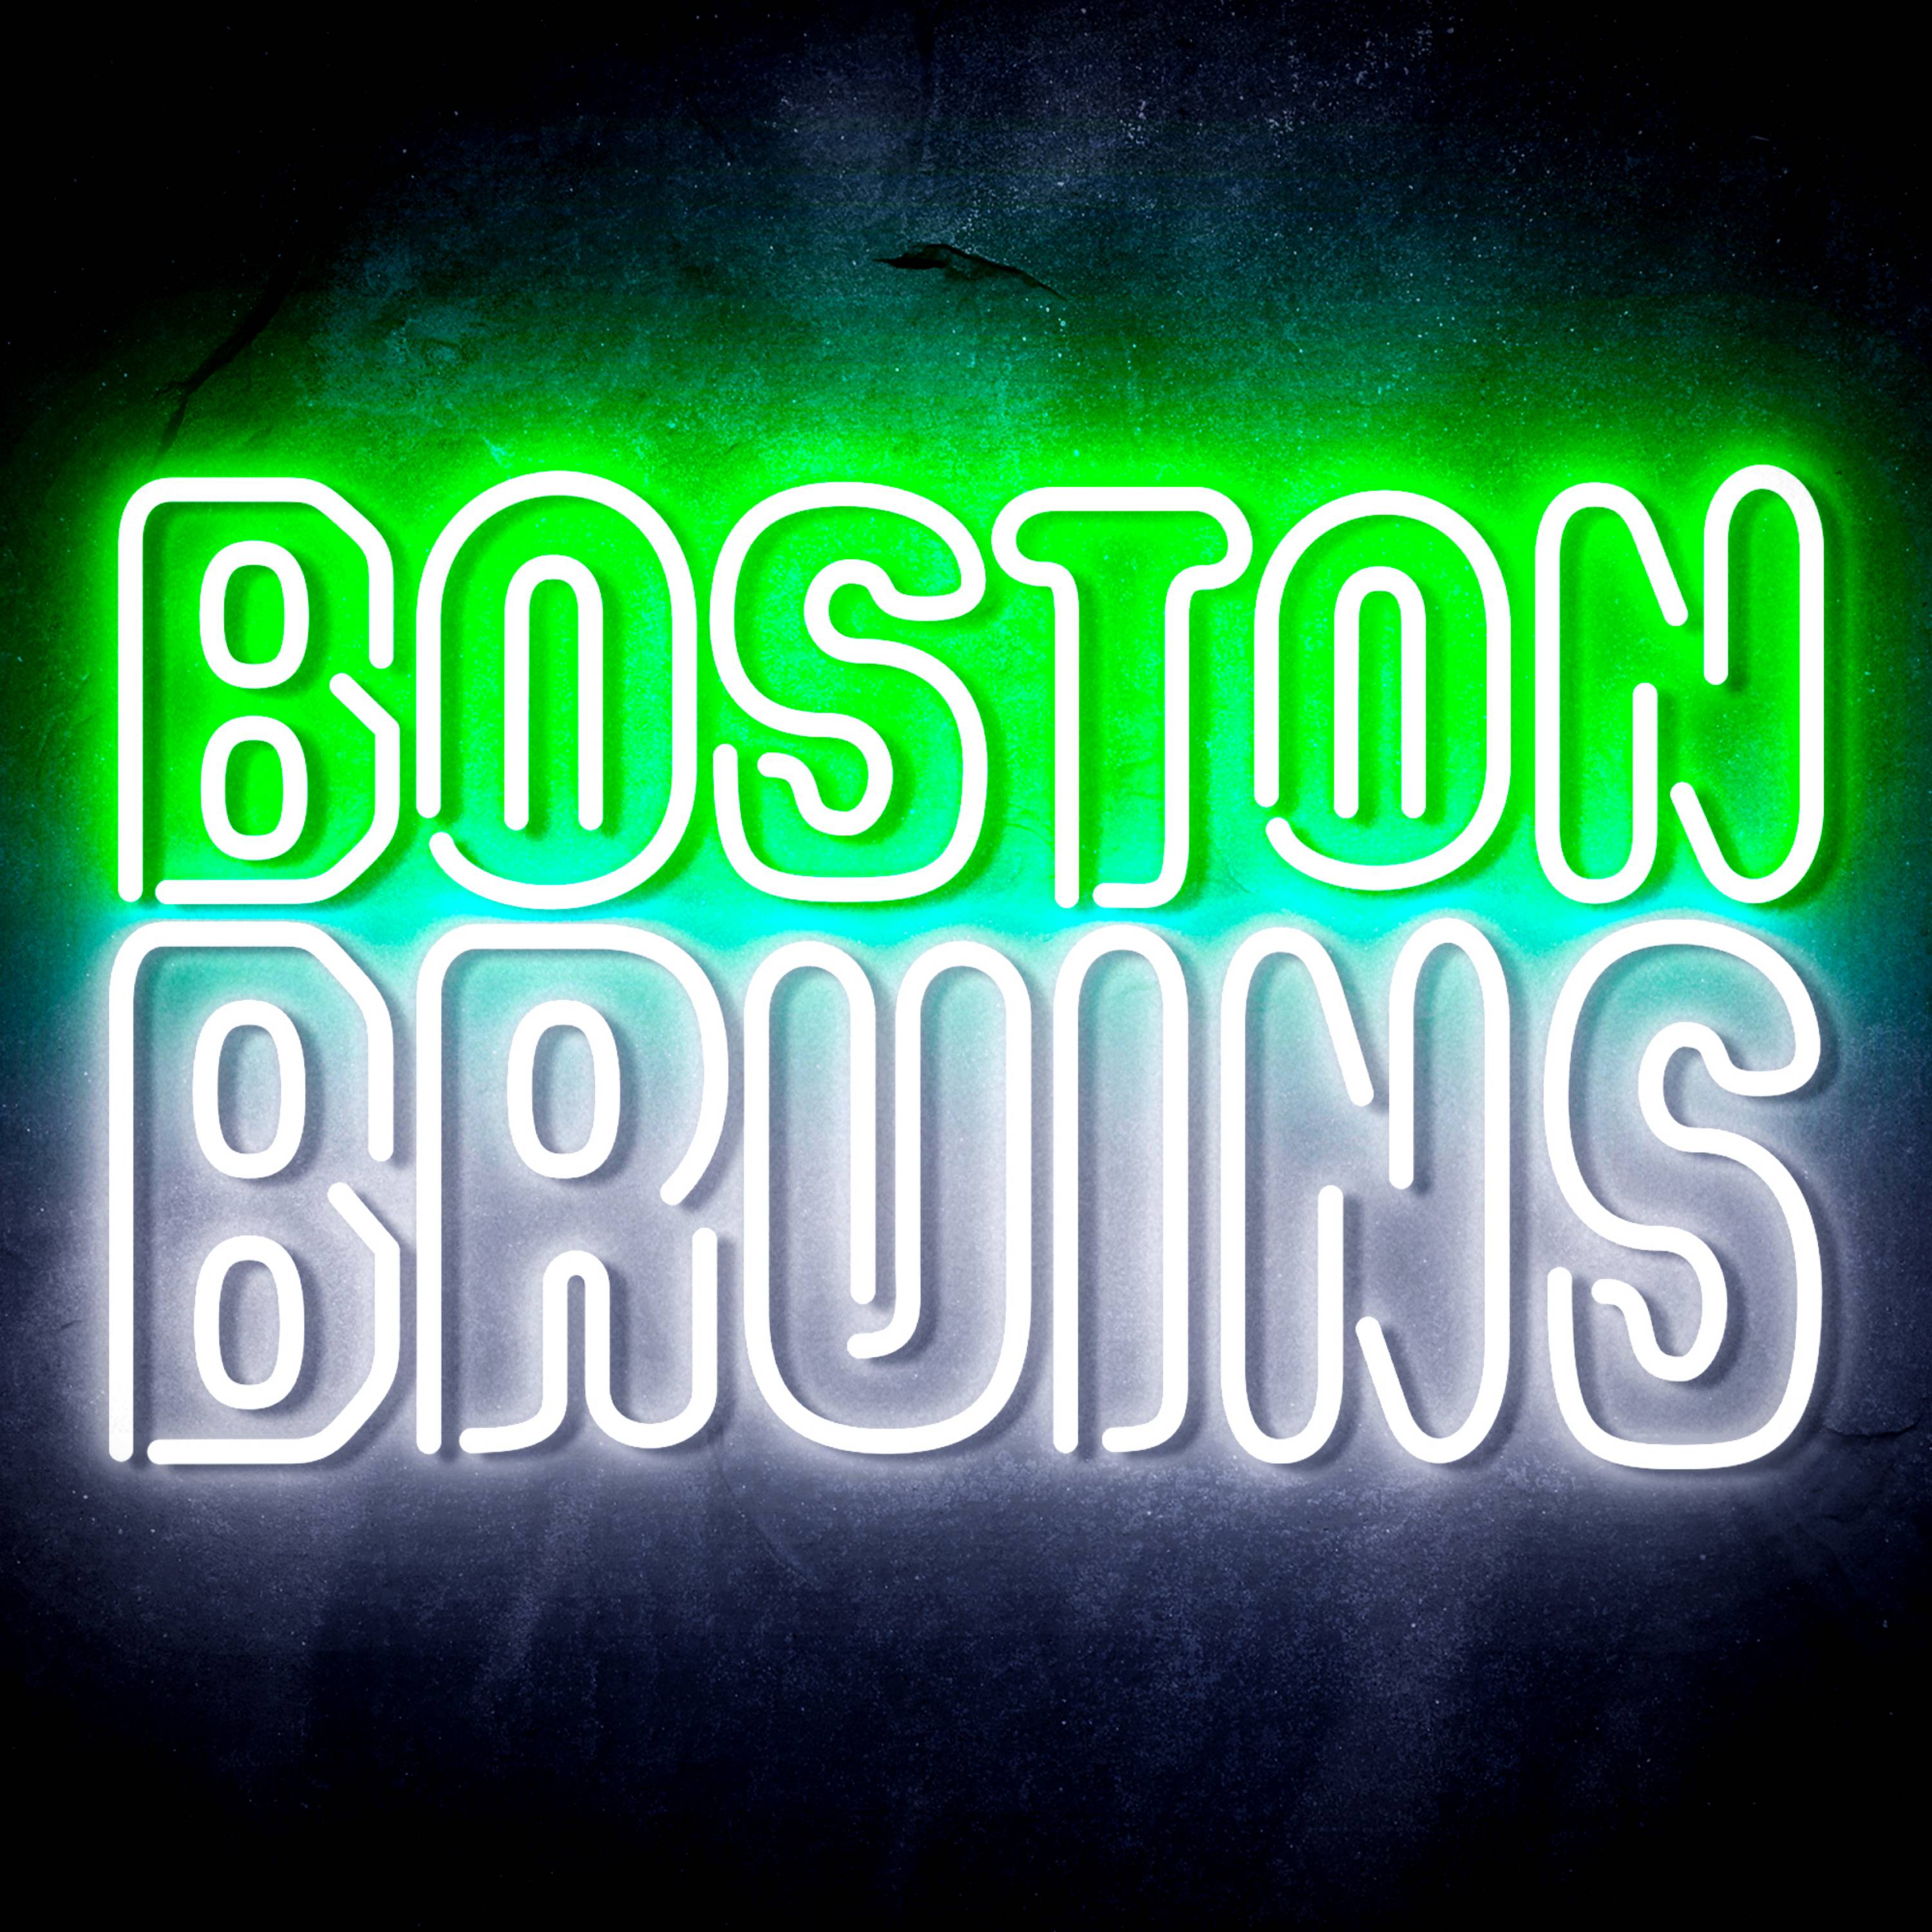 NHL Boston Bruins LED Neon Sign